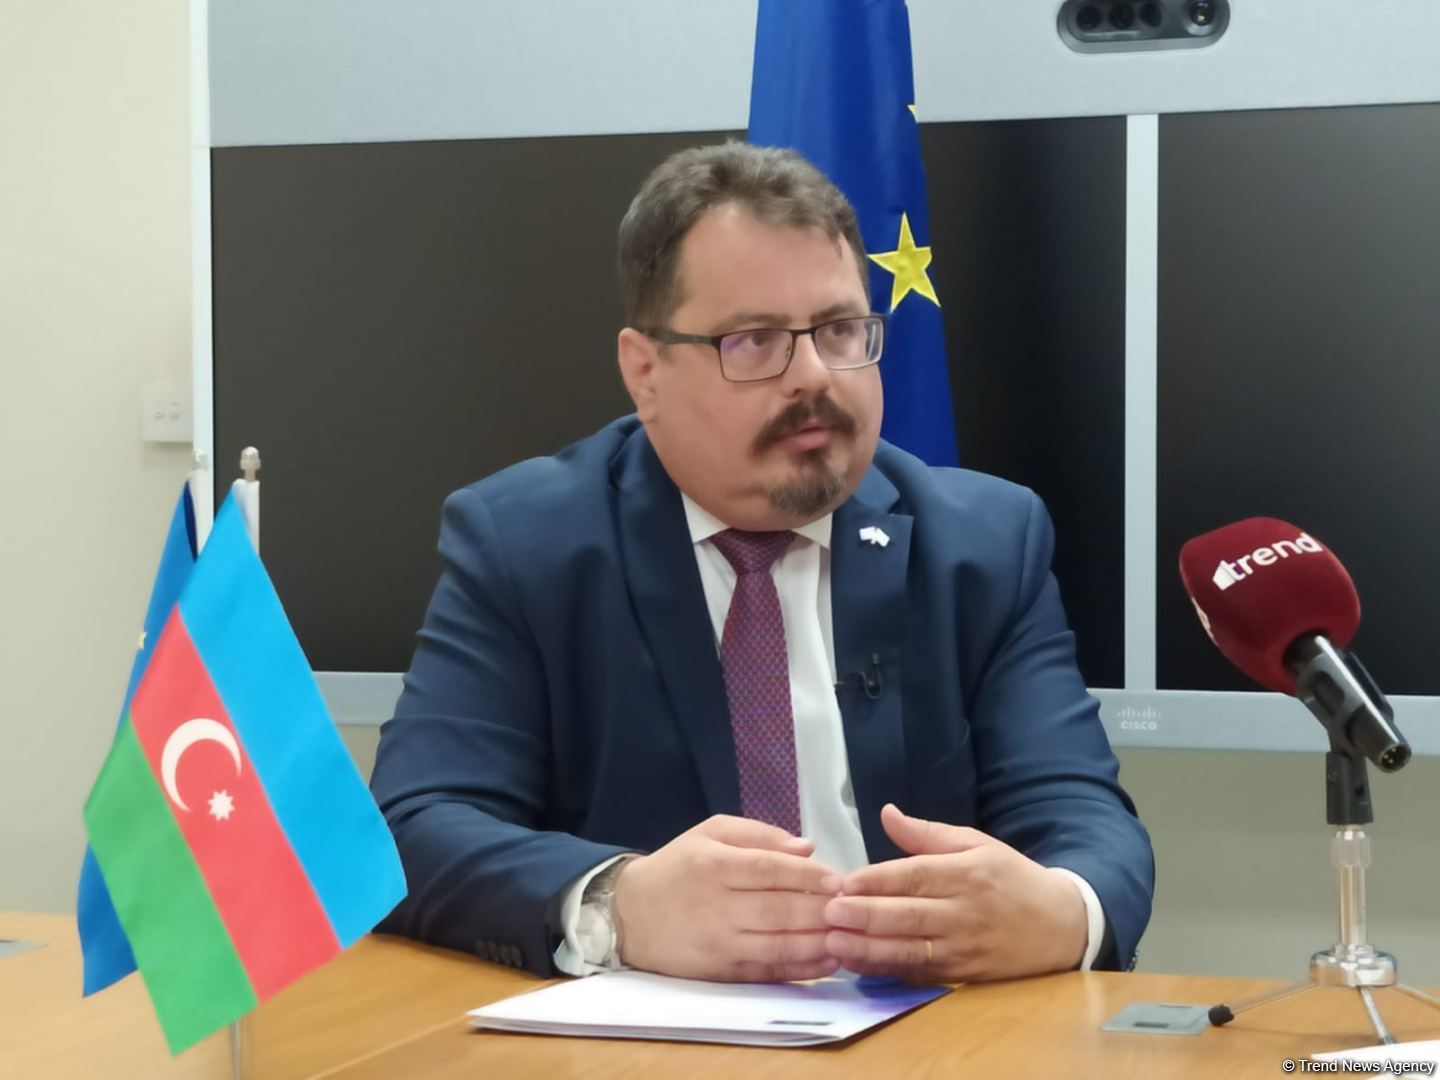 EU actively contributes to normalization of relations between Azerbaijan, Armenia - ambassador